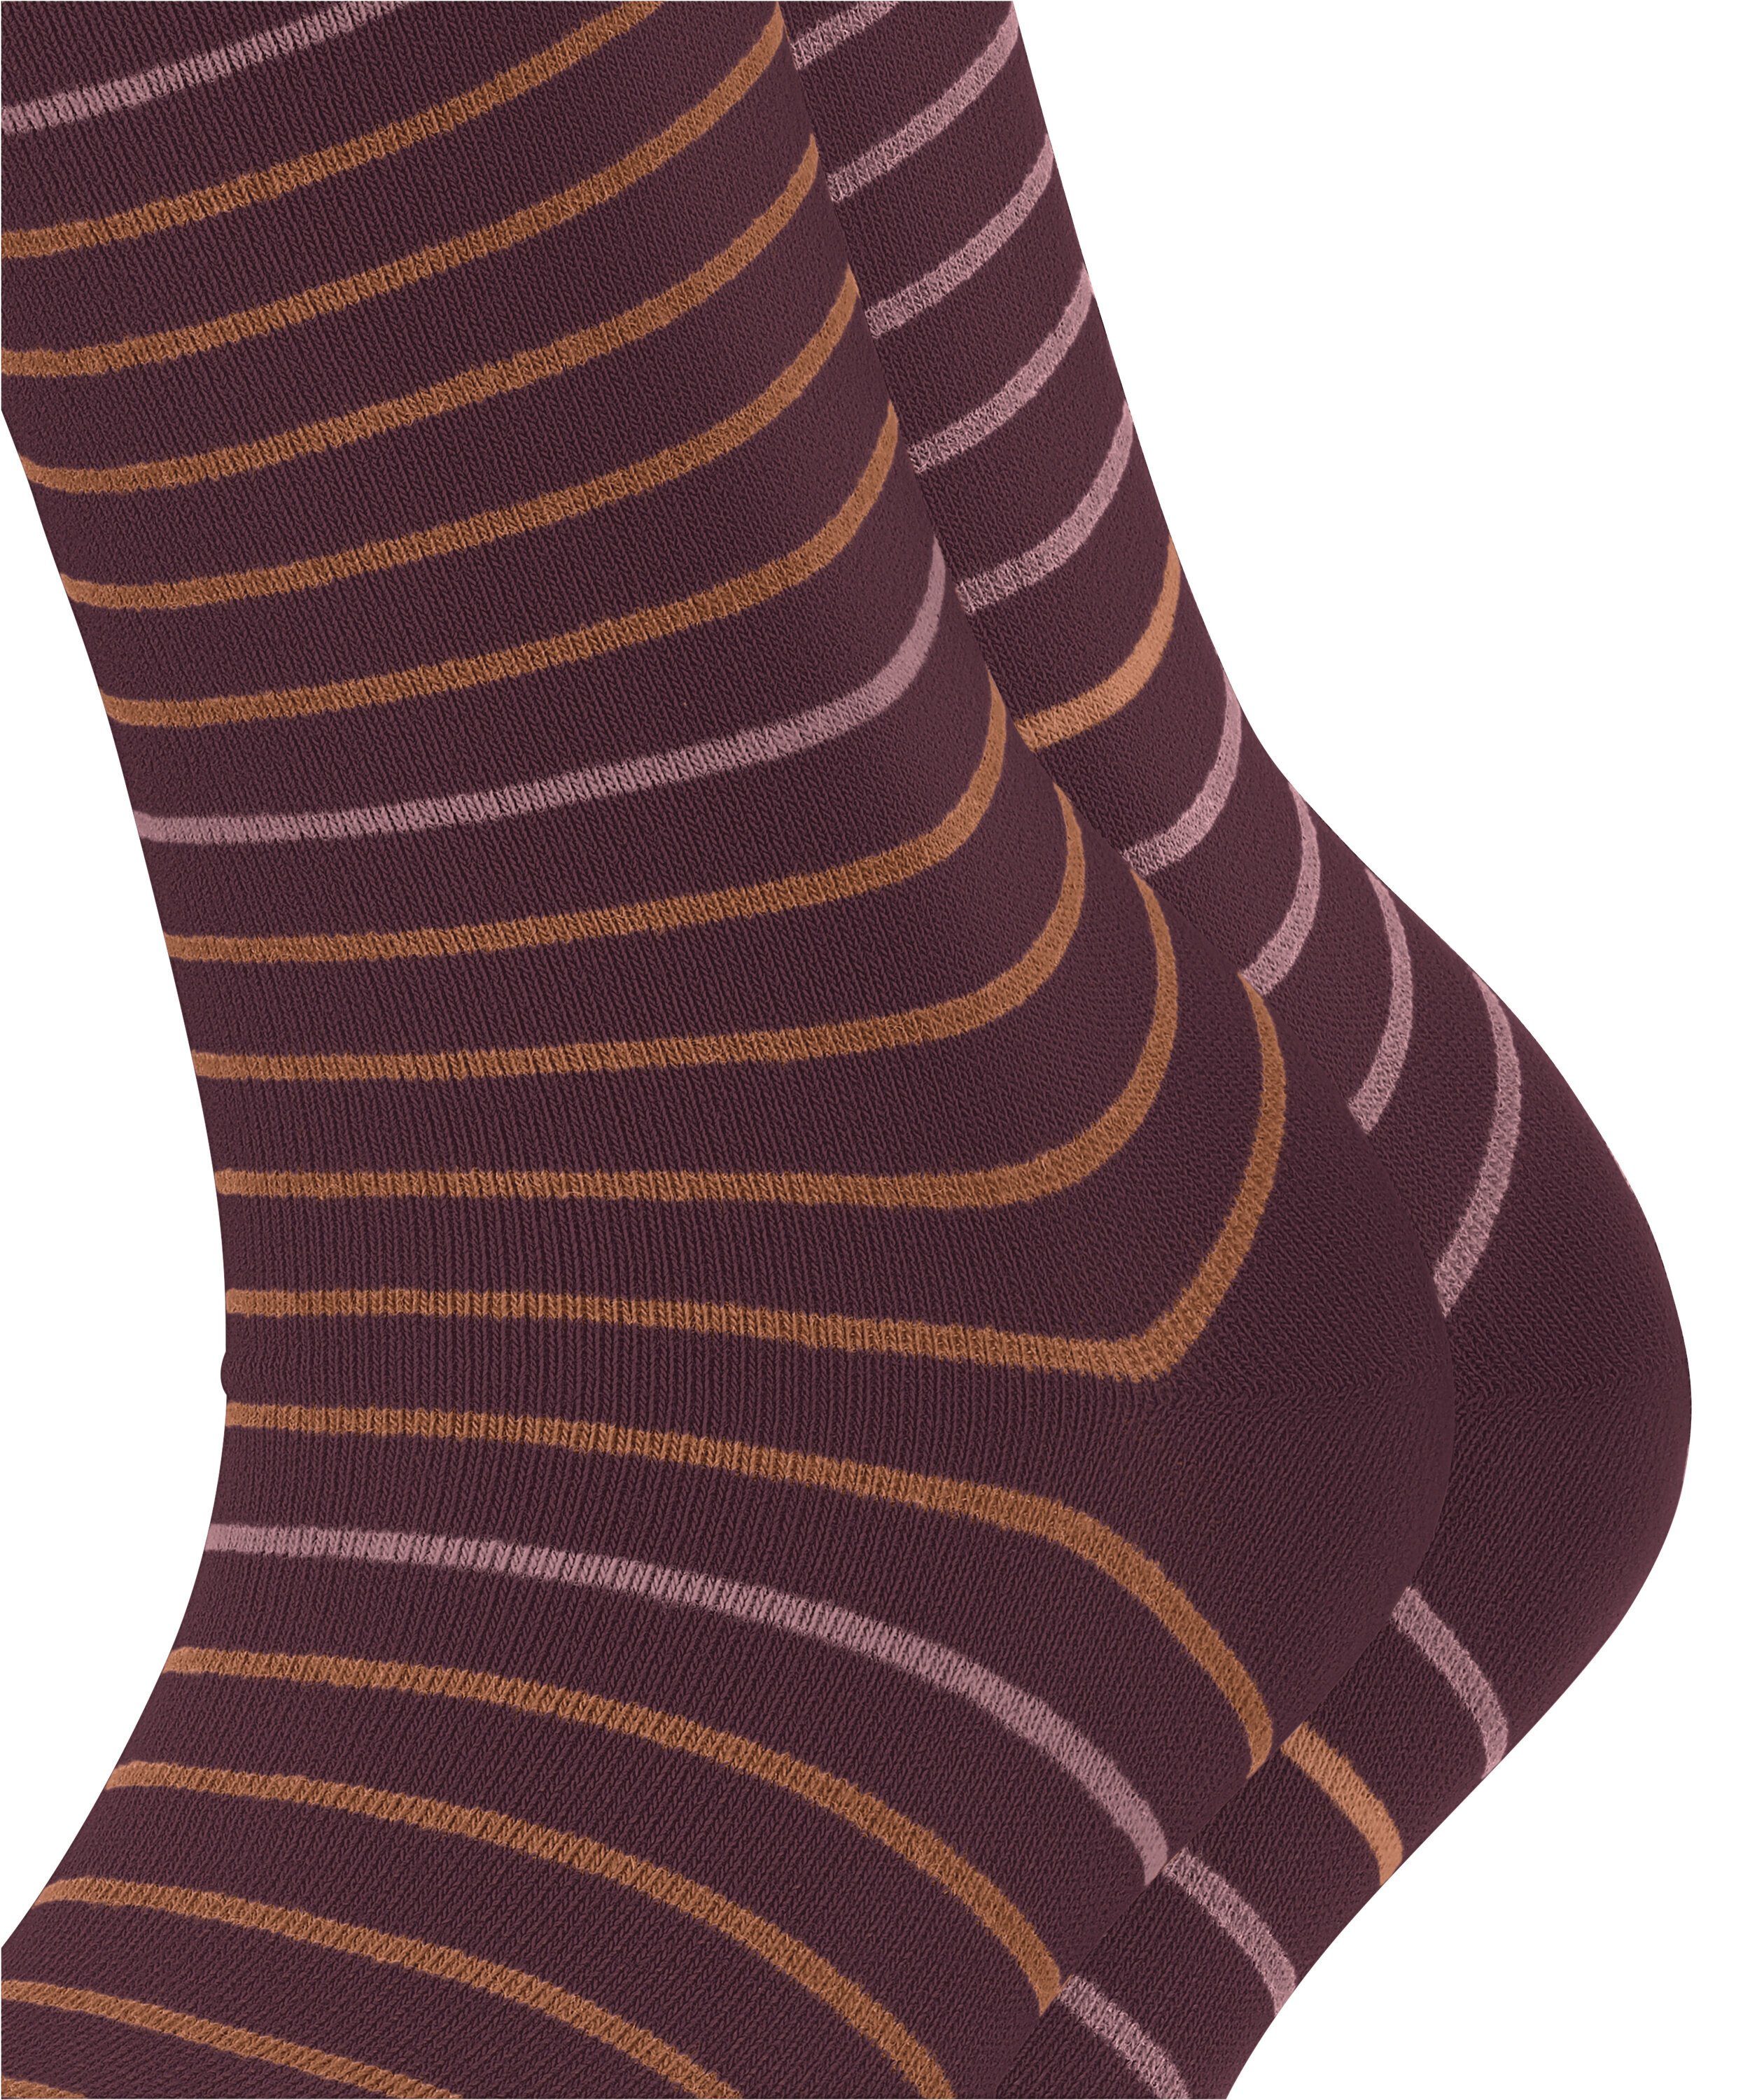 Esprit Socken Fine Stripe (2-Paar) 2-Pack claret (8375)